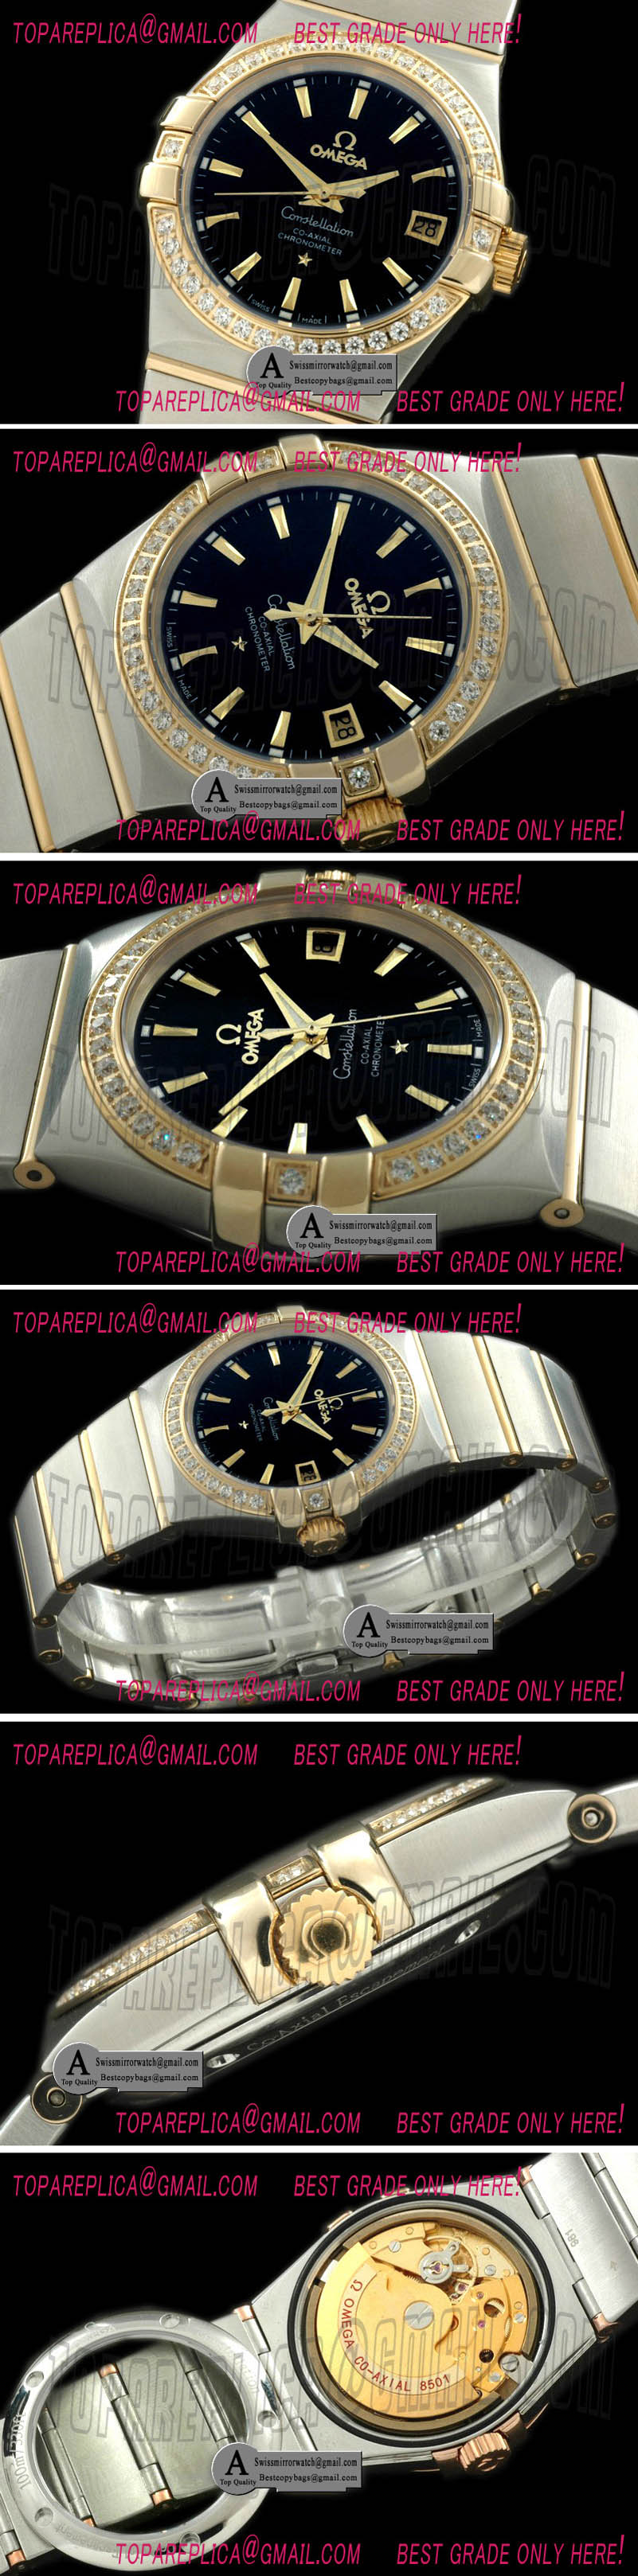 Omega Double Eagle Midsize Automatic SS/Yellow Gold/Diamond Black Stick A-2813 Replica Watches